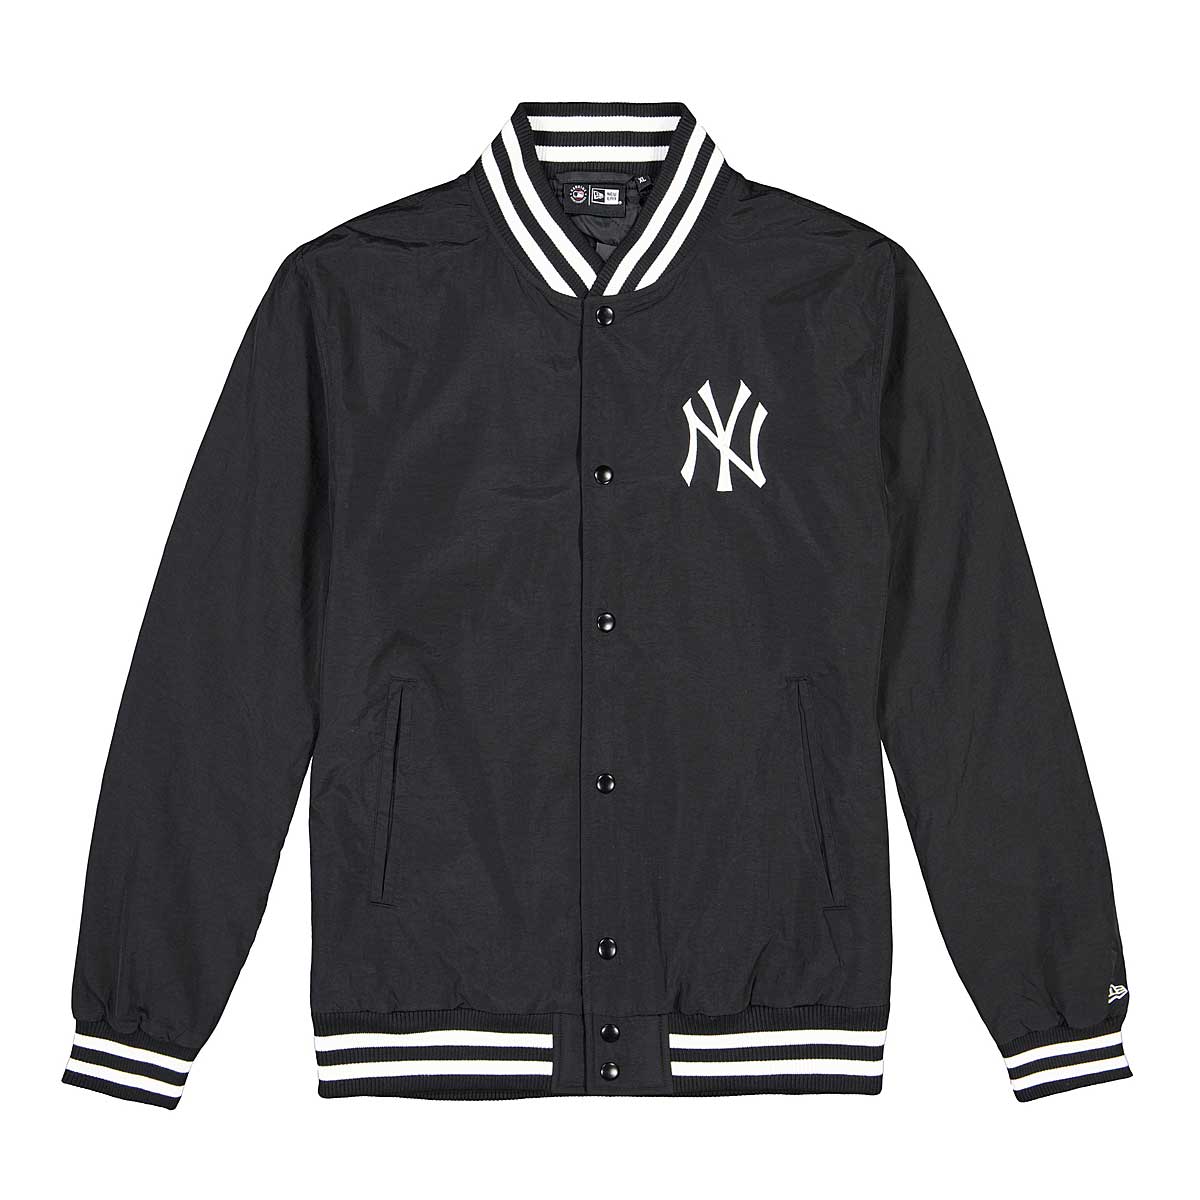 New Era Mlb New York Yankees Bomber Jacket, Black